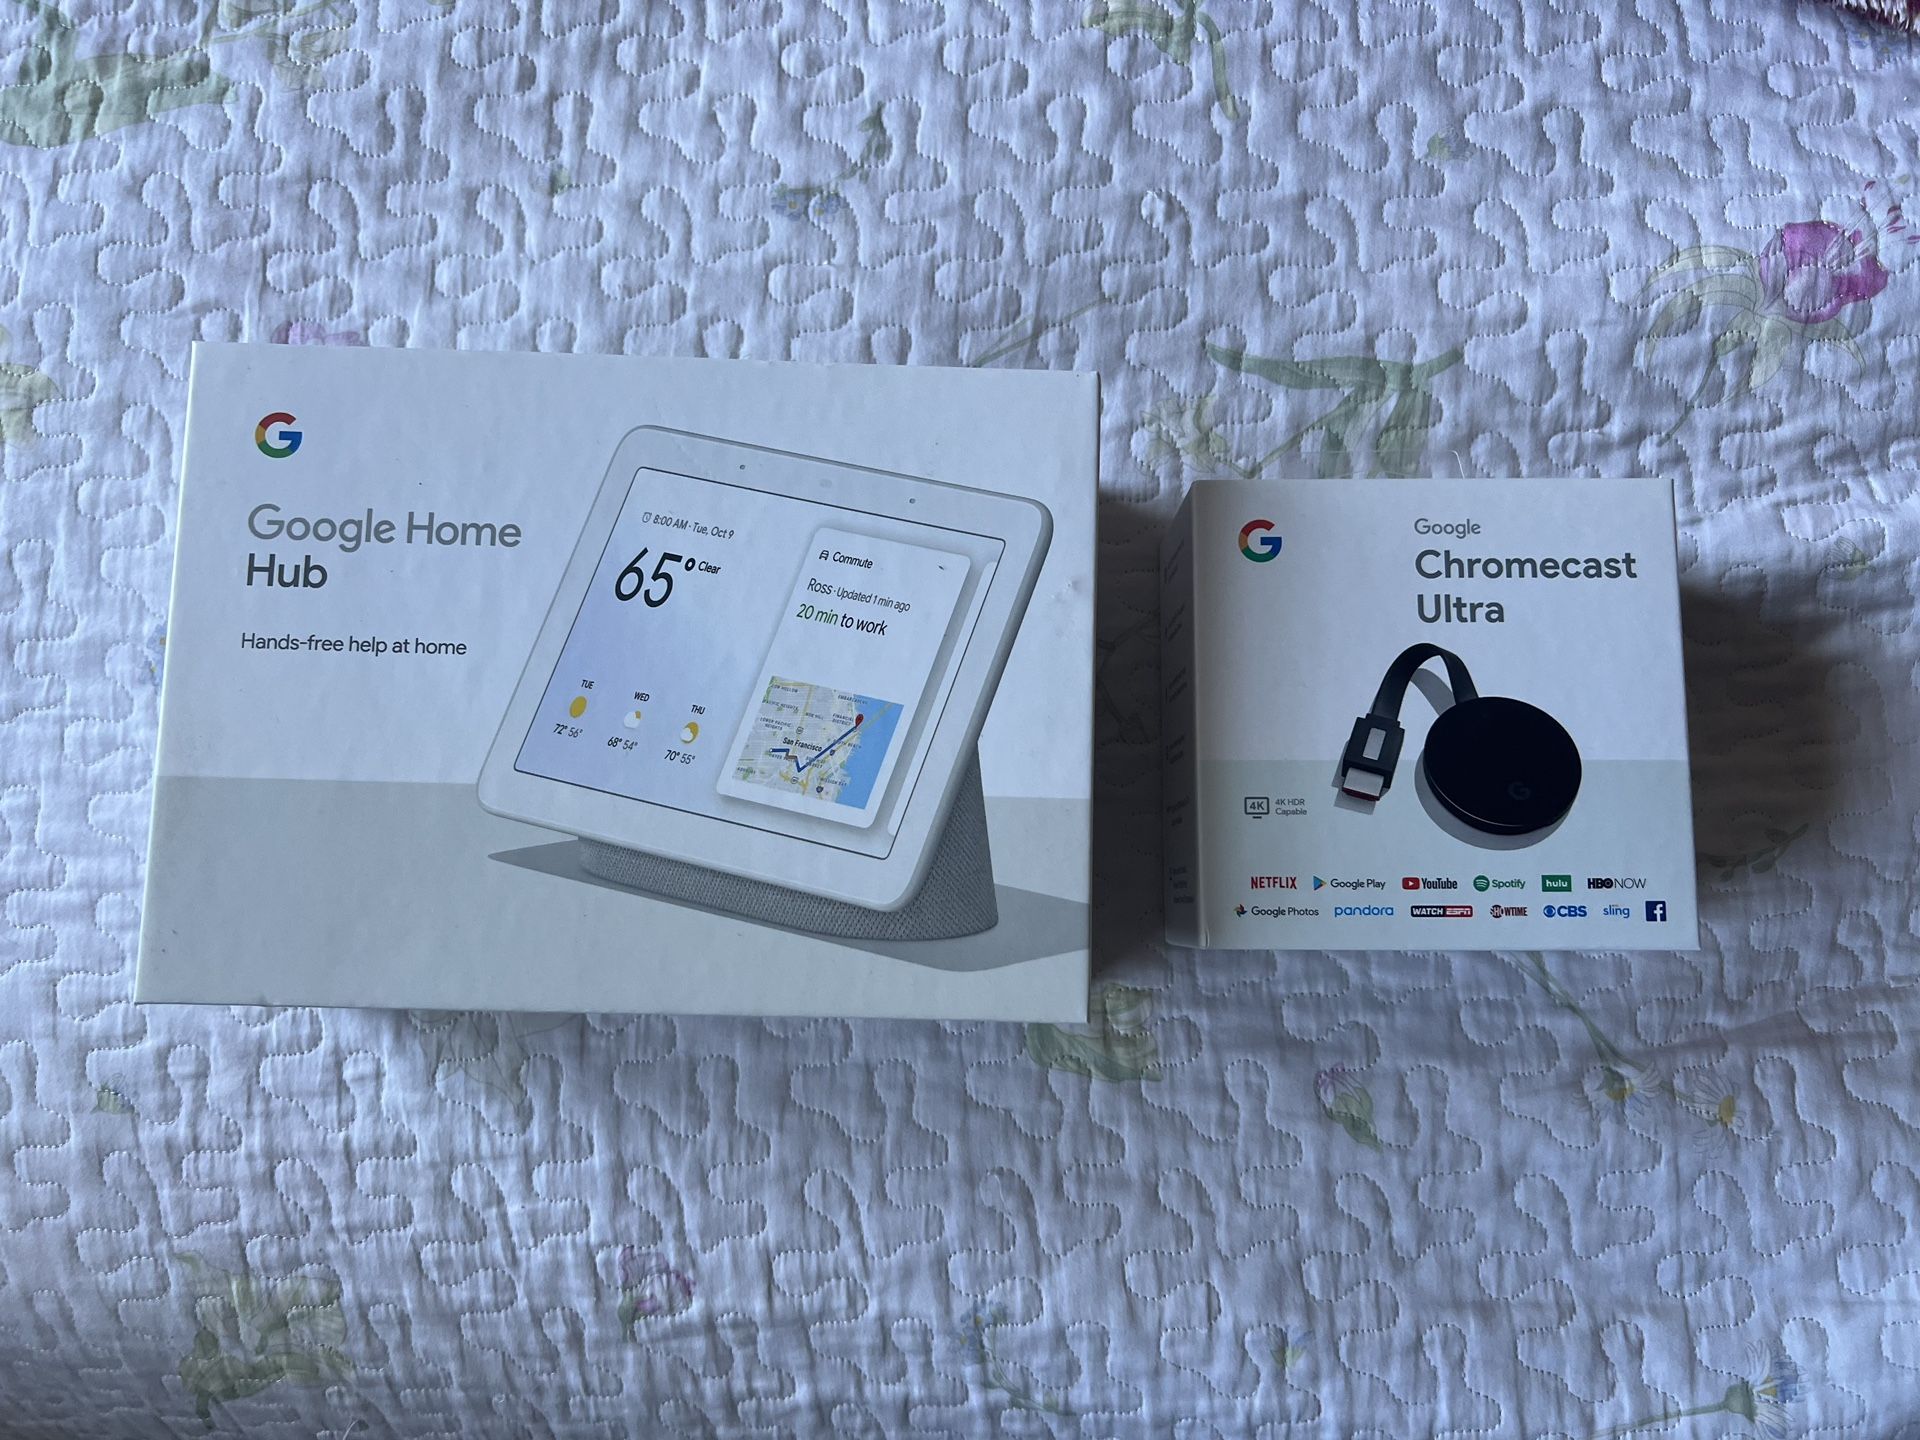 Google Home Hub And Chromecast Ultra 4k Streamer